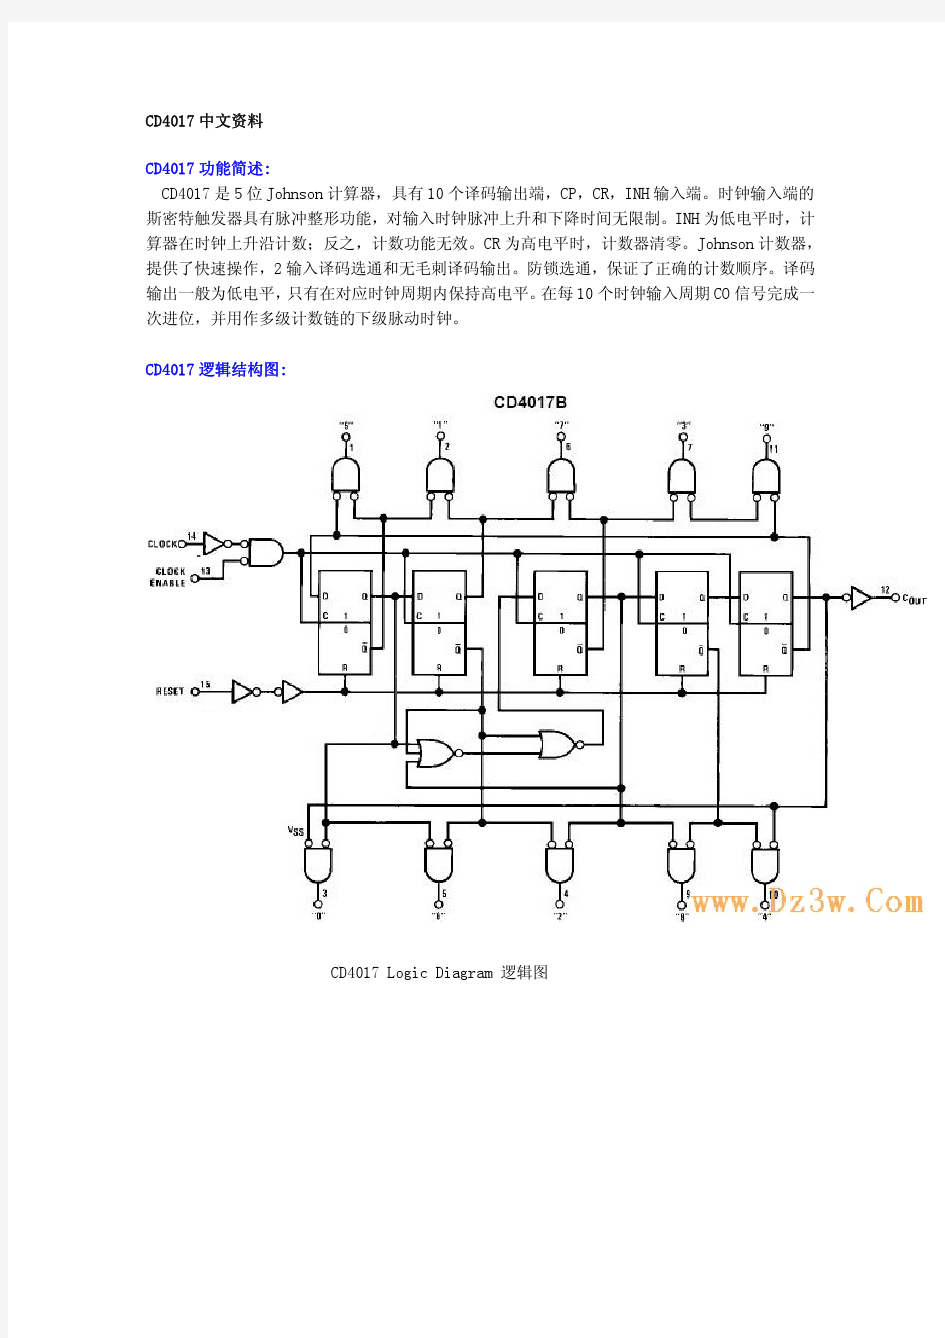 CD4017中文资料